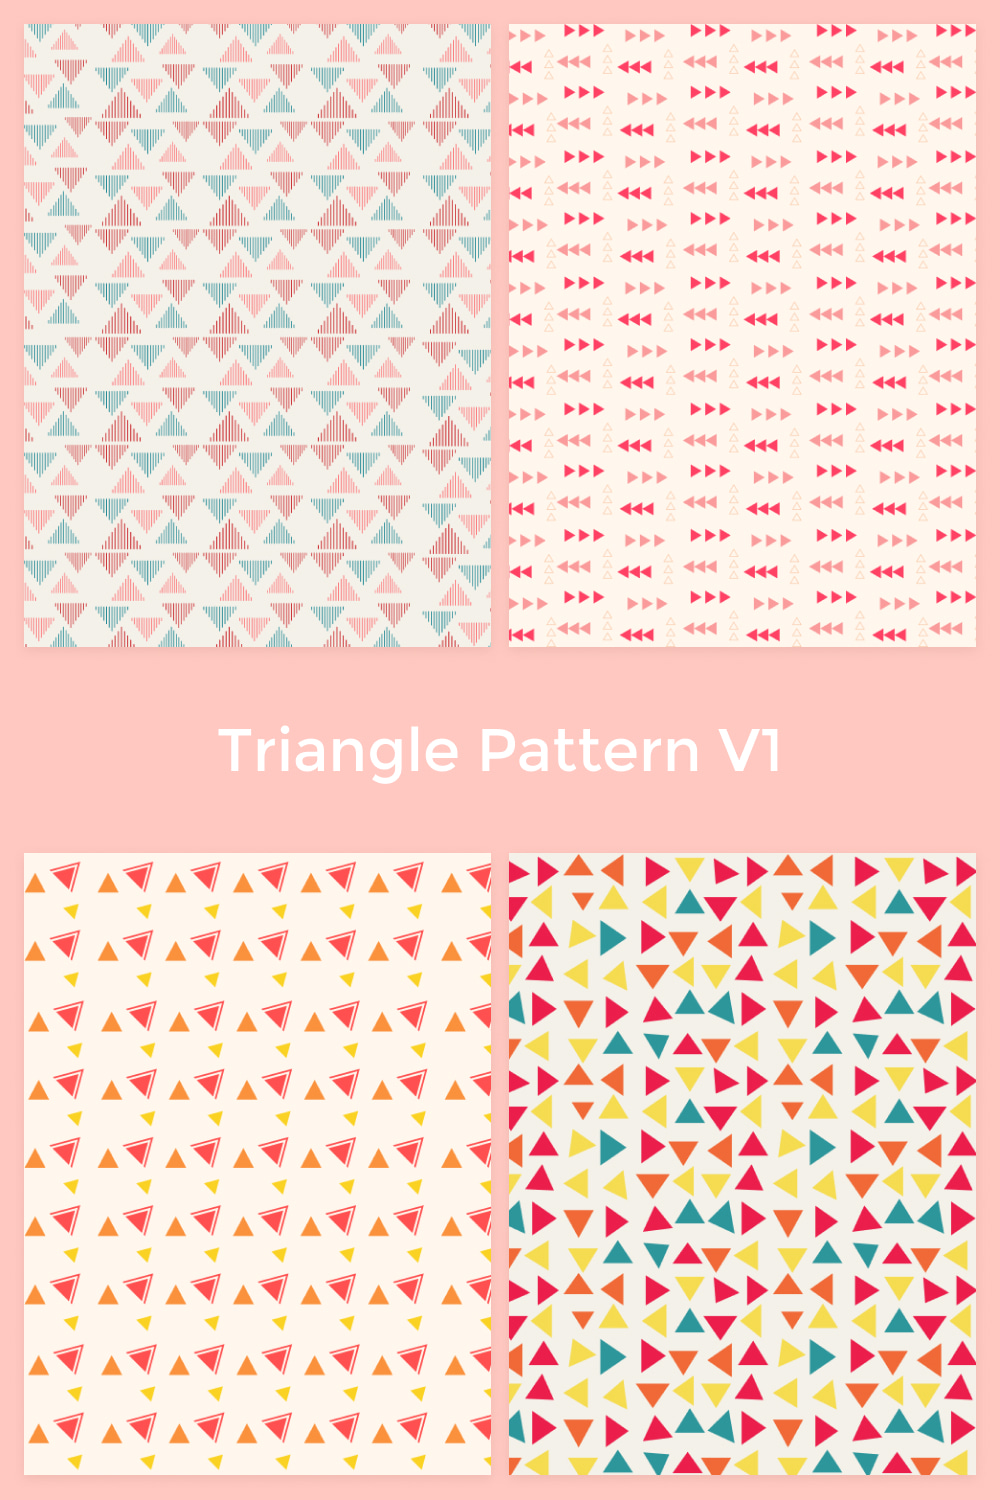 So colorful triangle pattern designs.